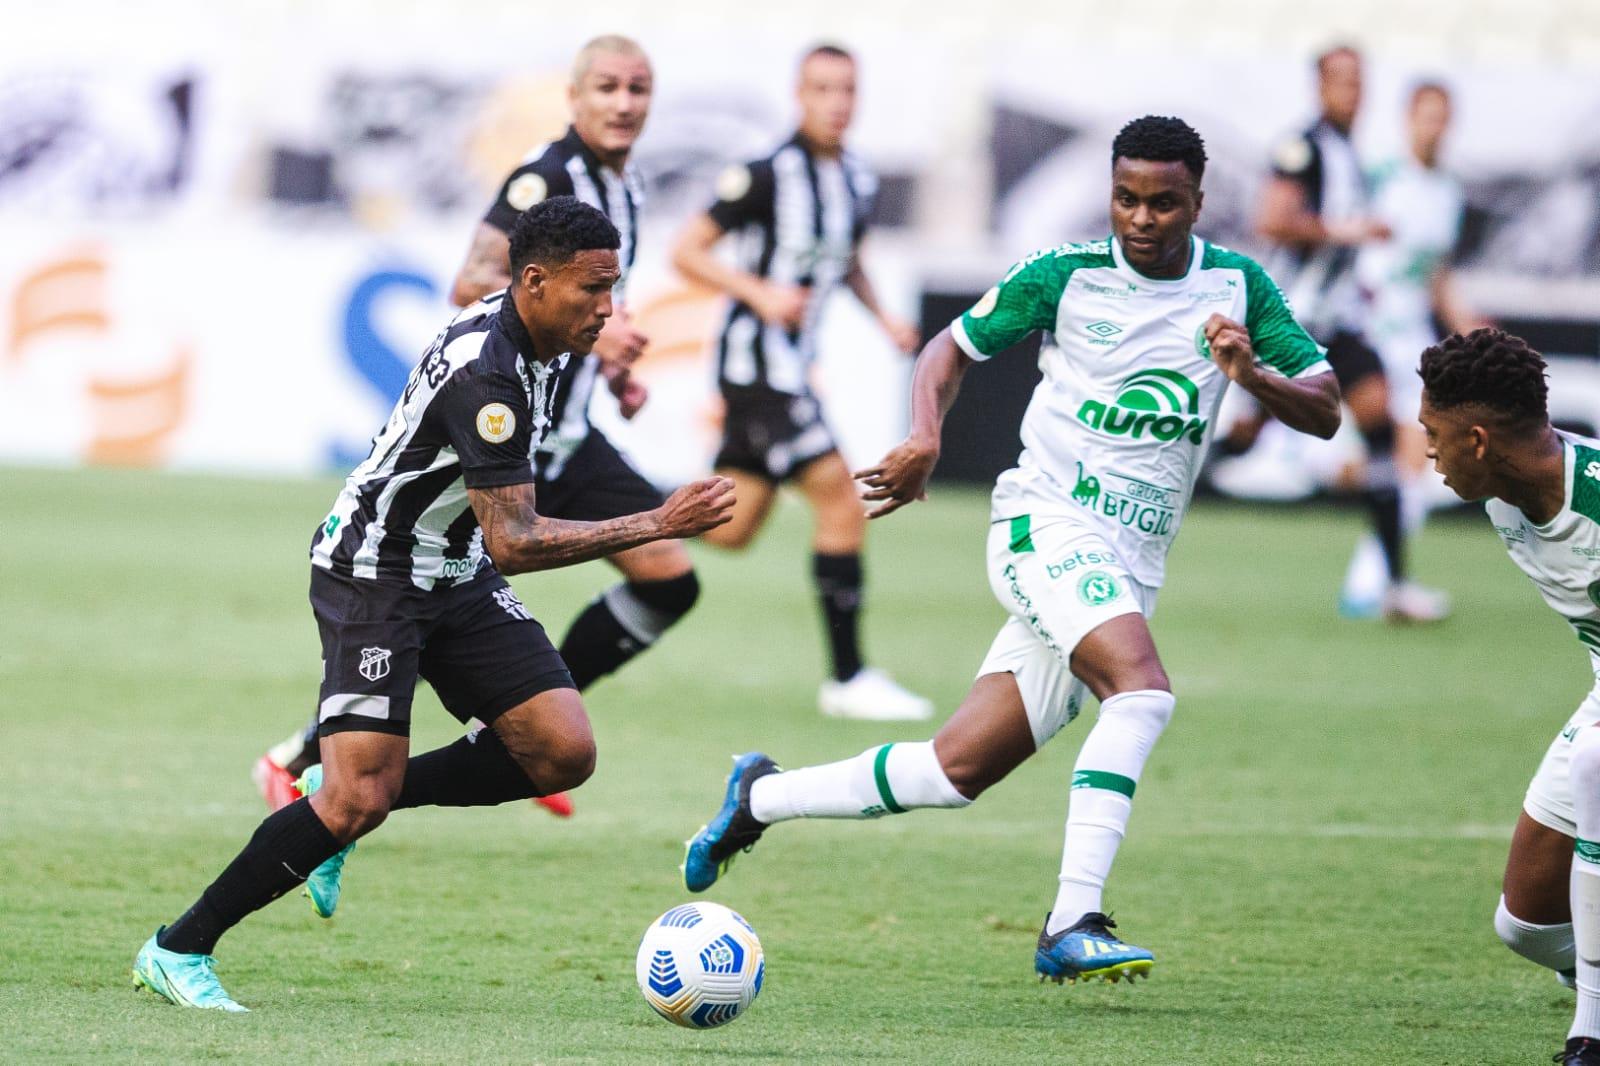 Atletas de Ceará e Chapecoense disputam bola